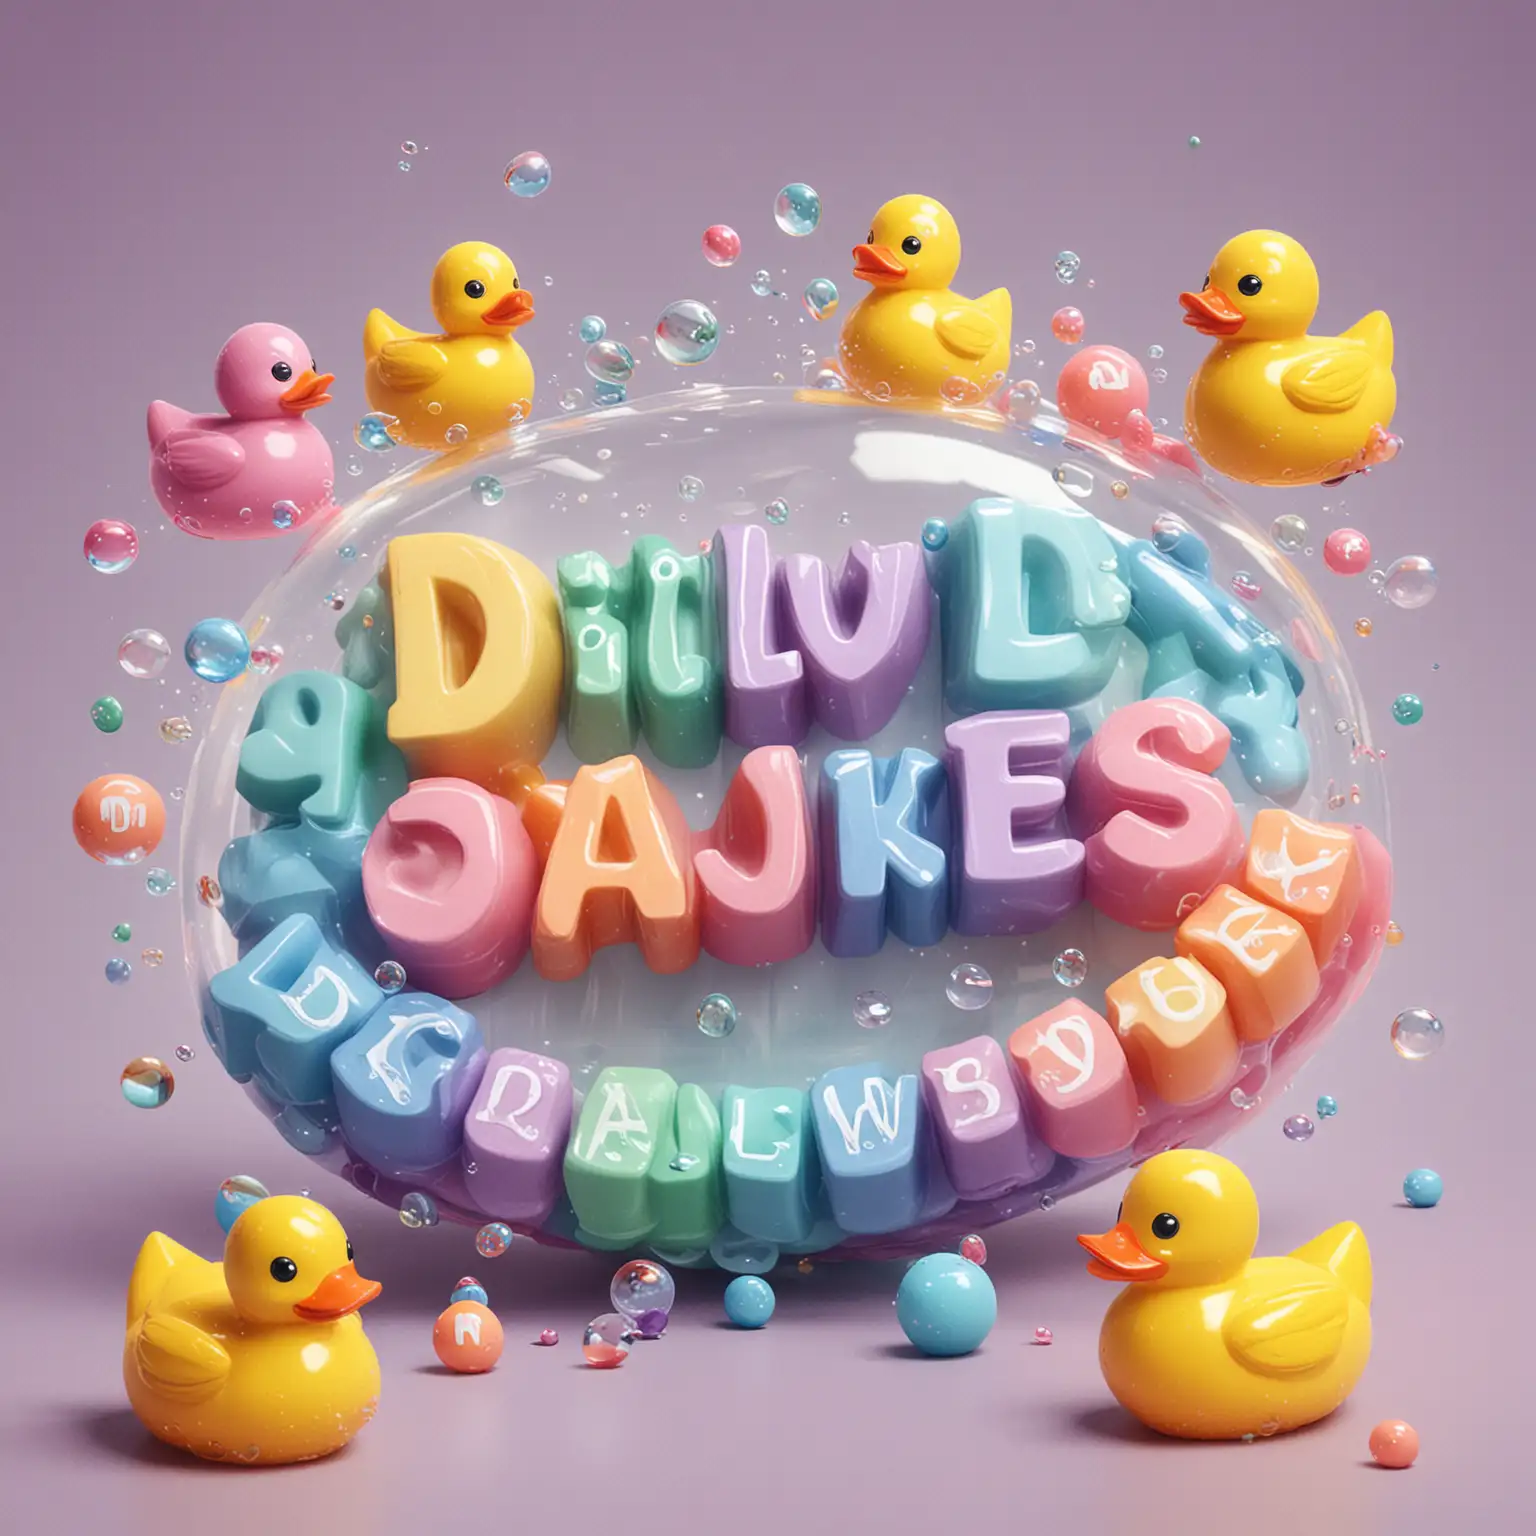 Colorful 3D Bubble Letter Business Logo with Rainbow Rubber Ducks